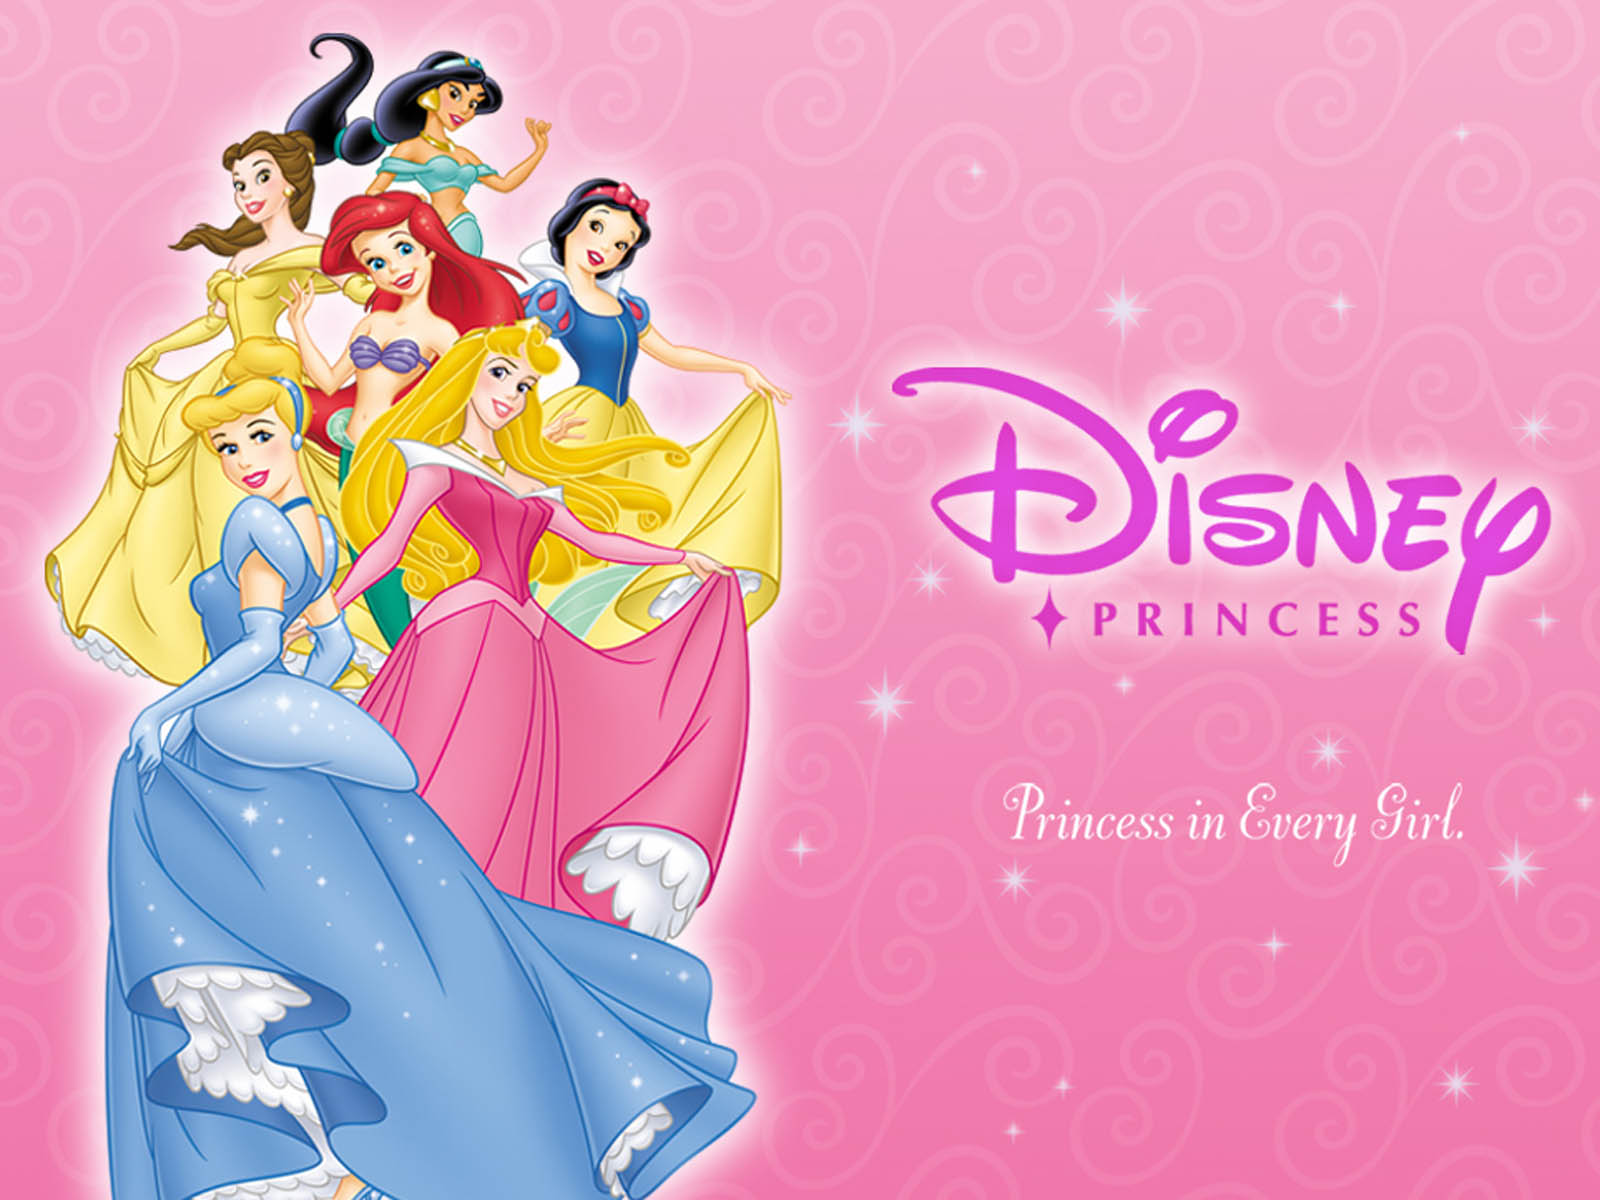 Tag Disney Princess Wallpaper Background Paos Image And